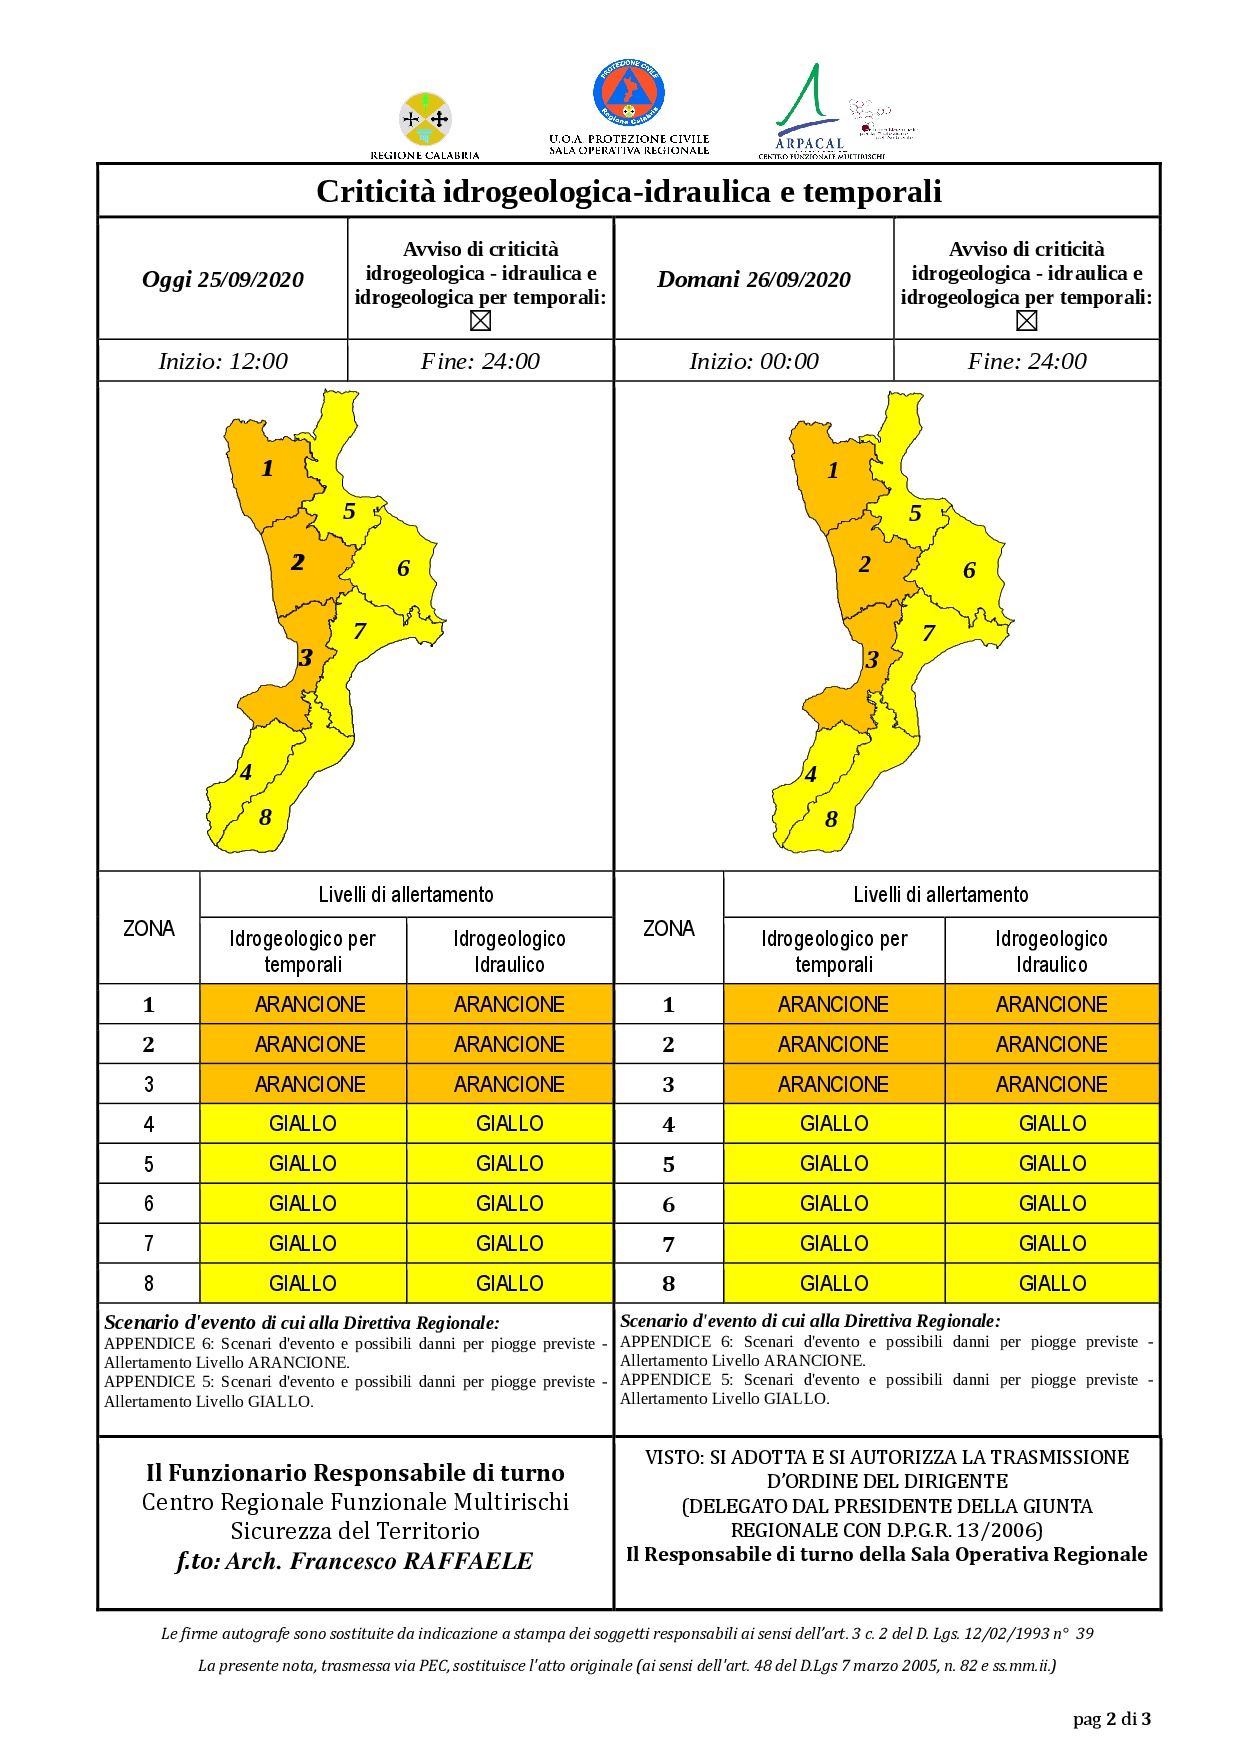 Criticità idrogeologica-idraulica e temporali in Calabria 25-09-2020